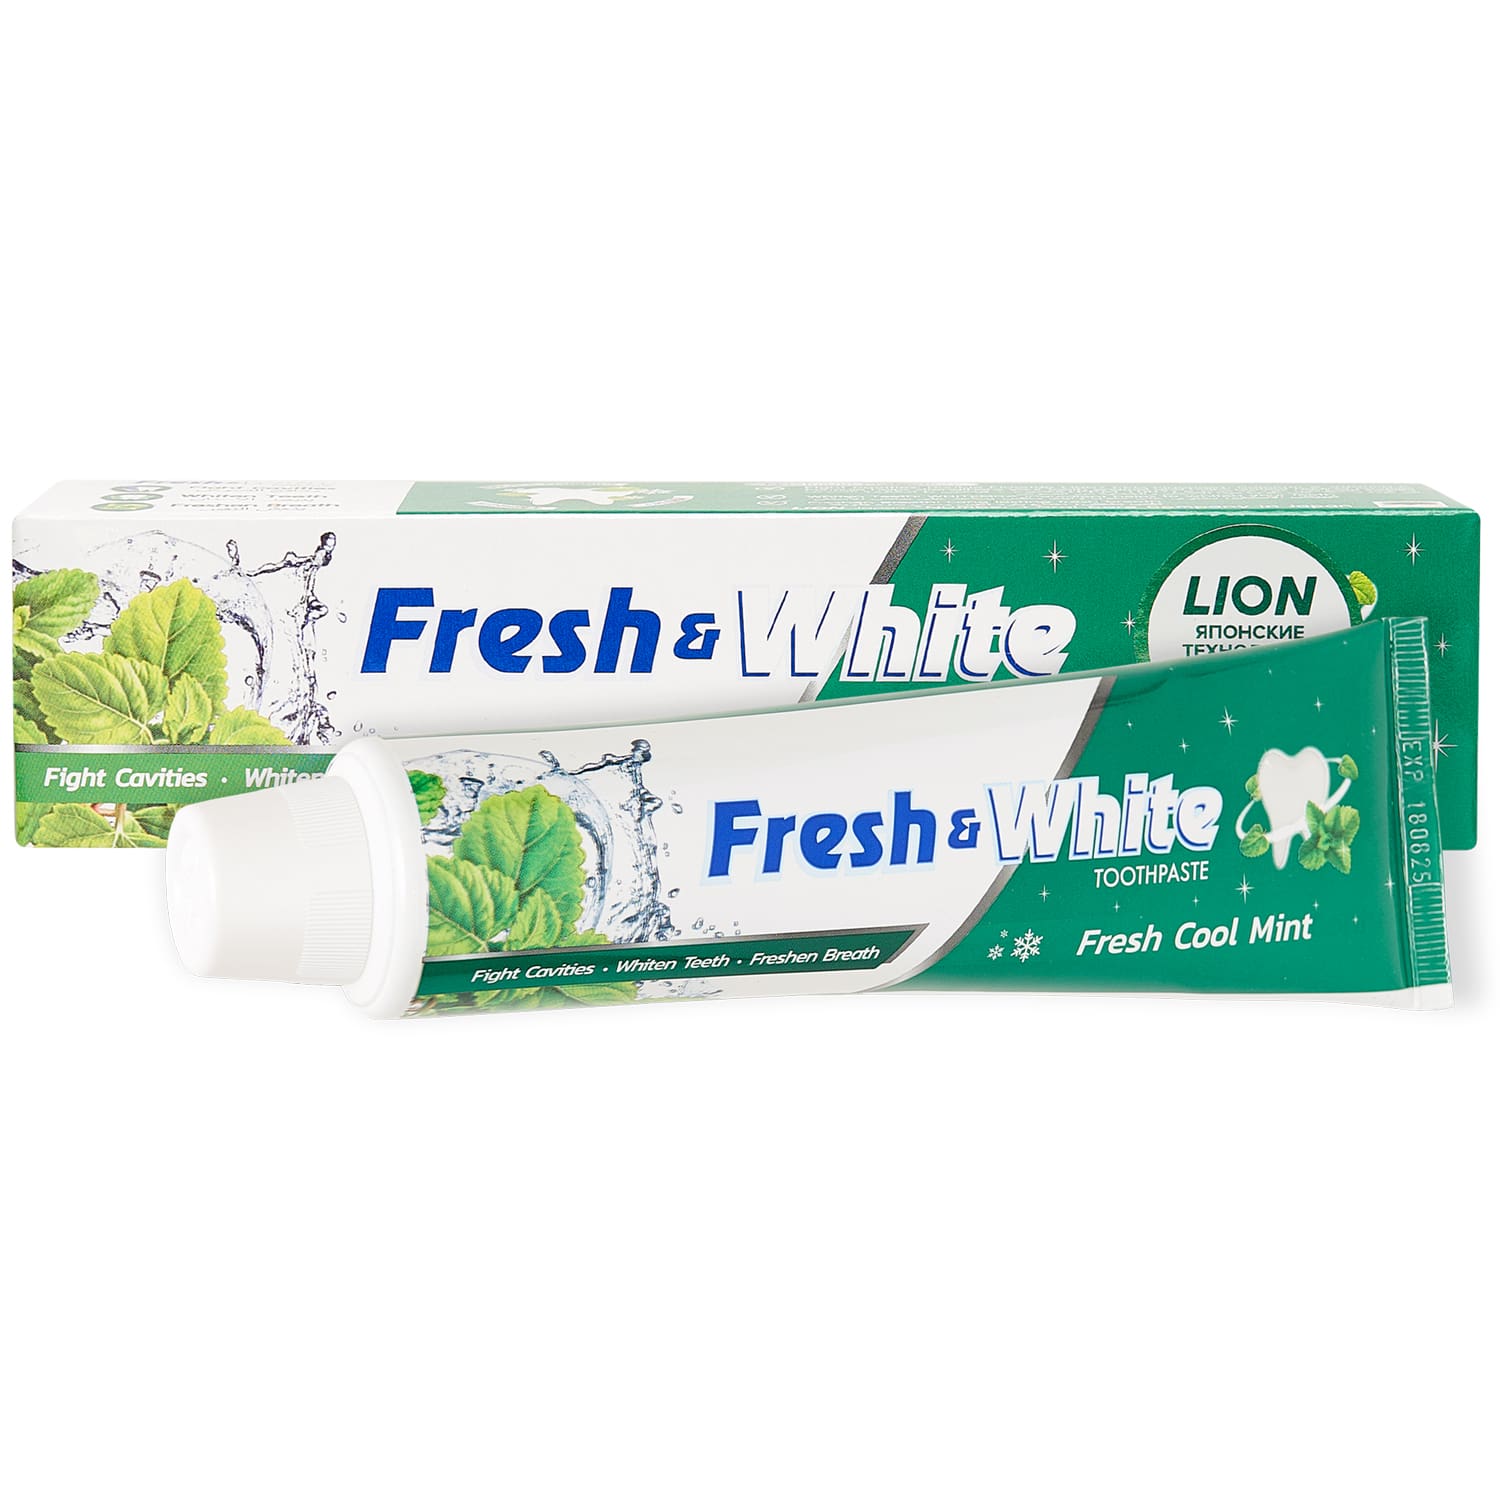 Lion Thailand Зубная паста для защиты от кариеса Прохладная мята, 160 г (Lion Thailand, Fresh & White)